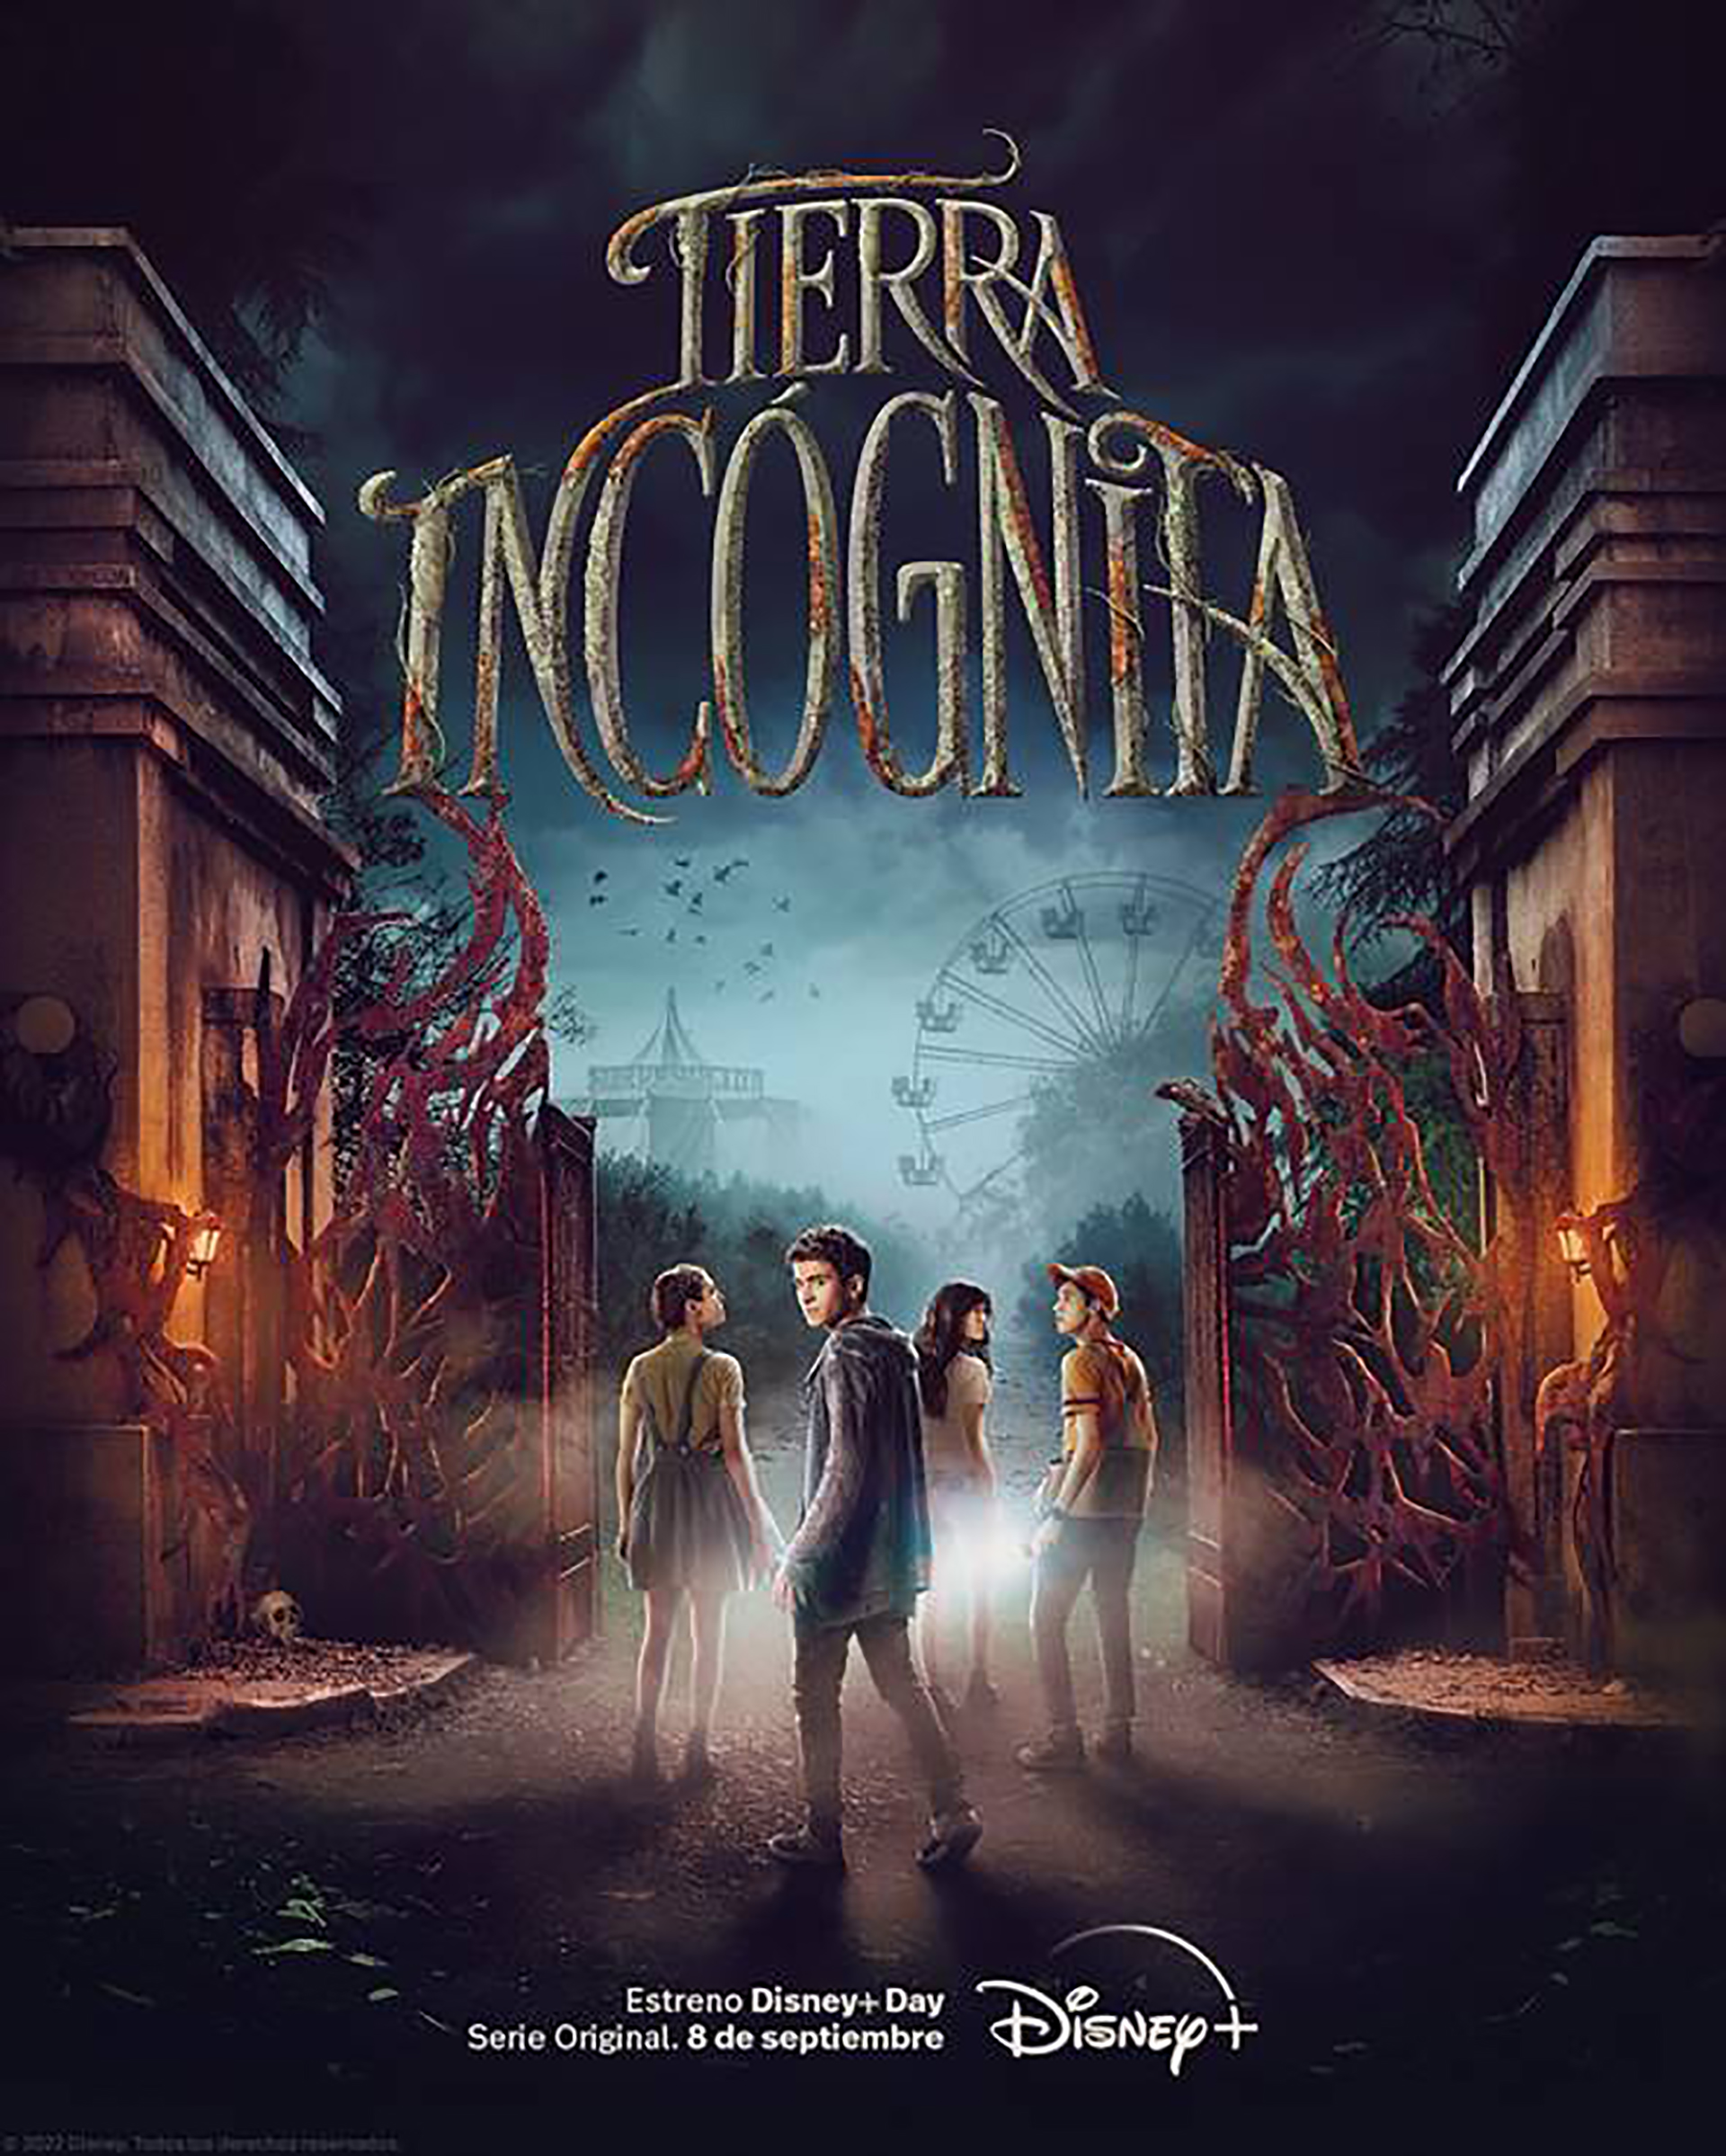 "Tierra incógnita", la serie de terror para toda la familia disponible en Disney Plus.

(Disney Plus)